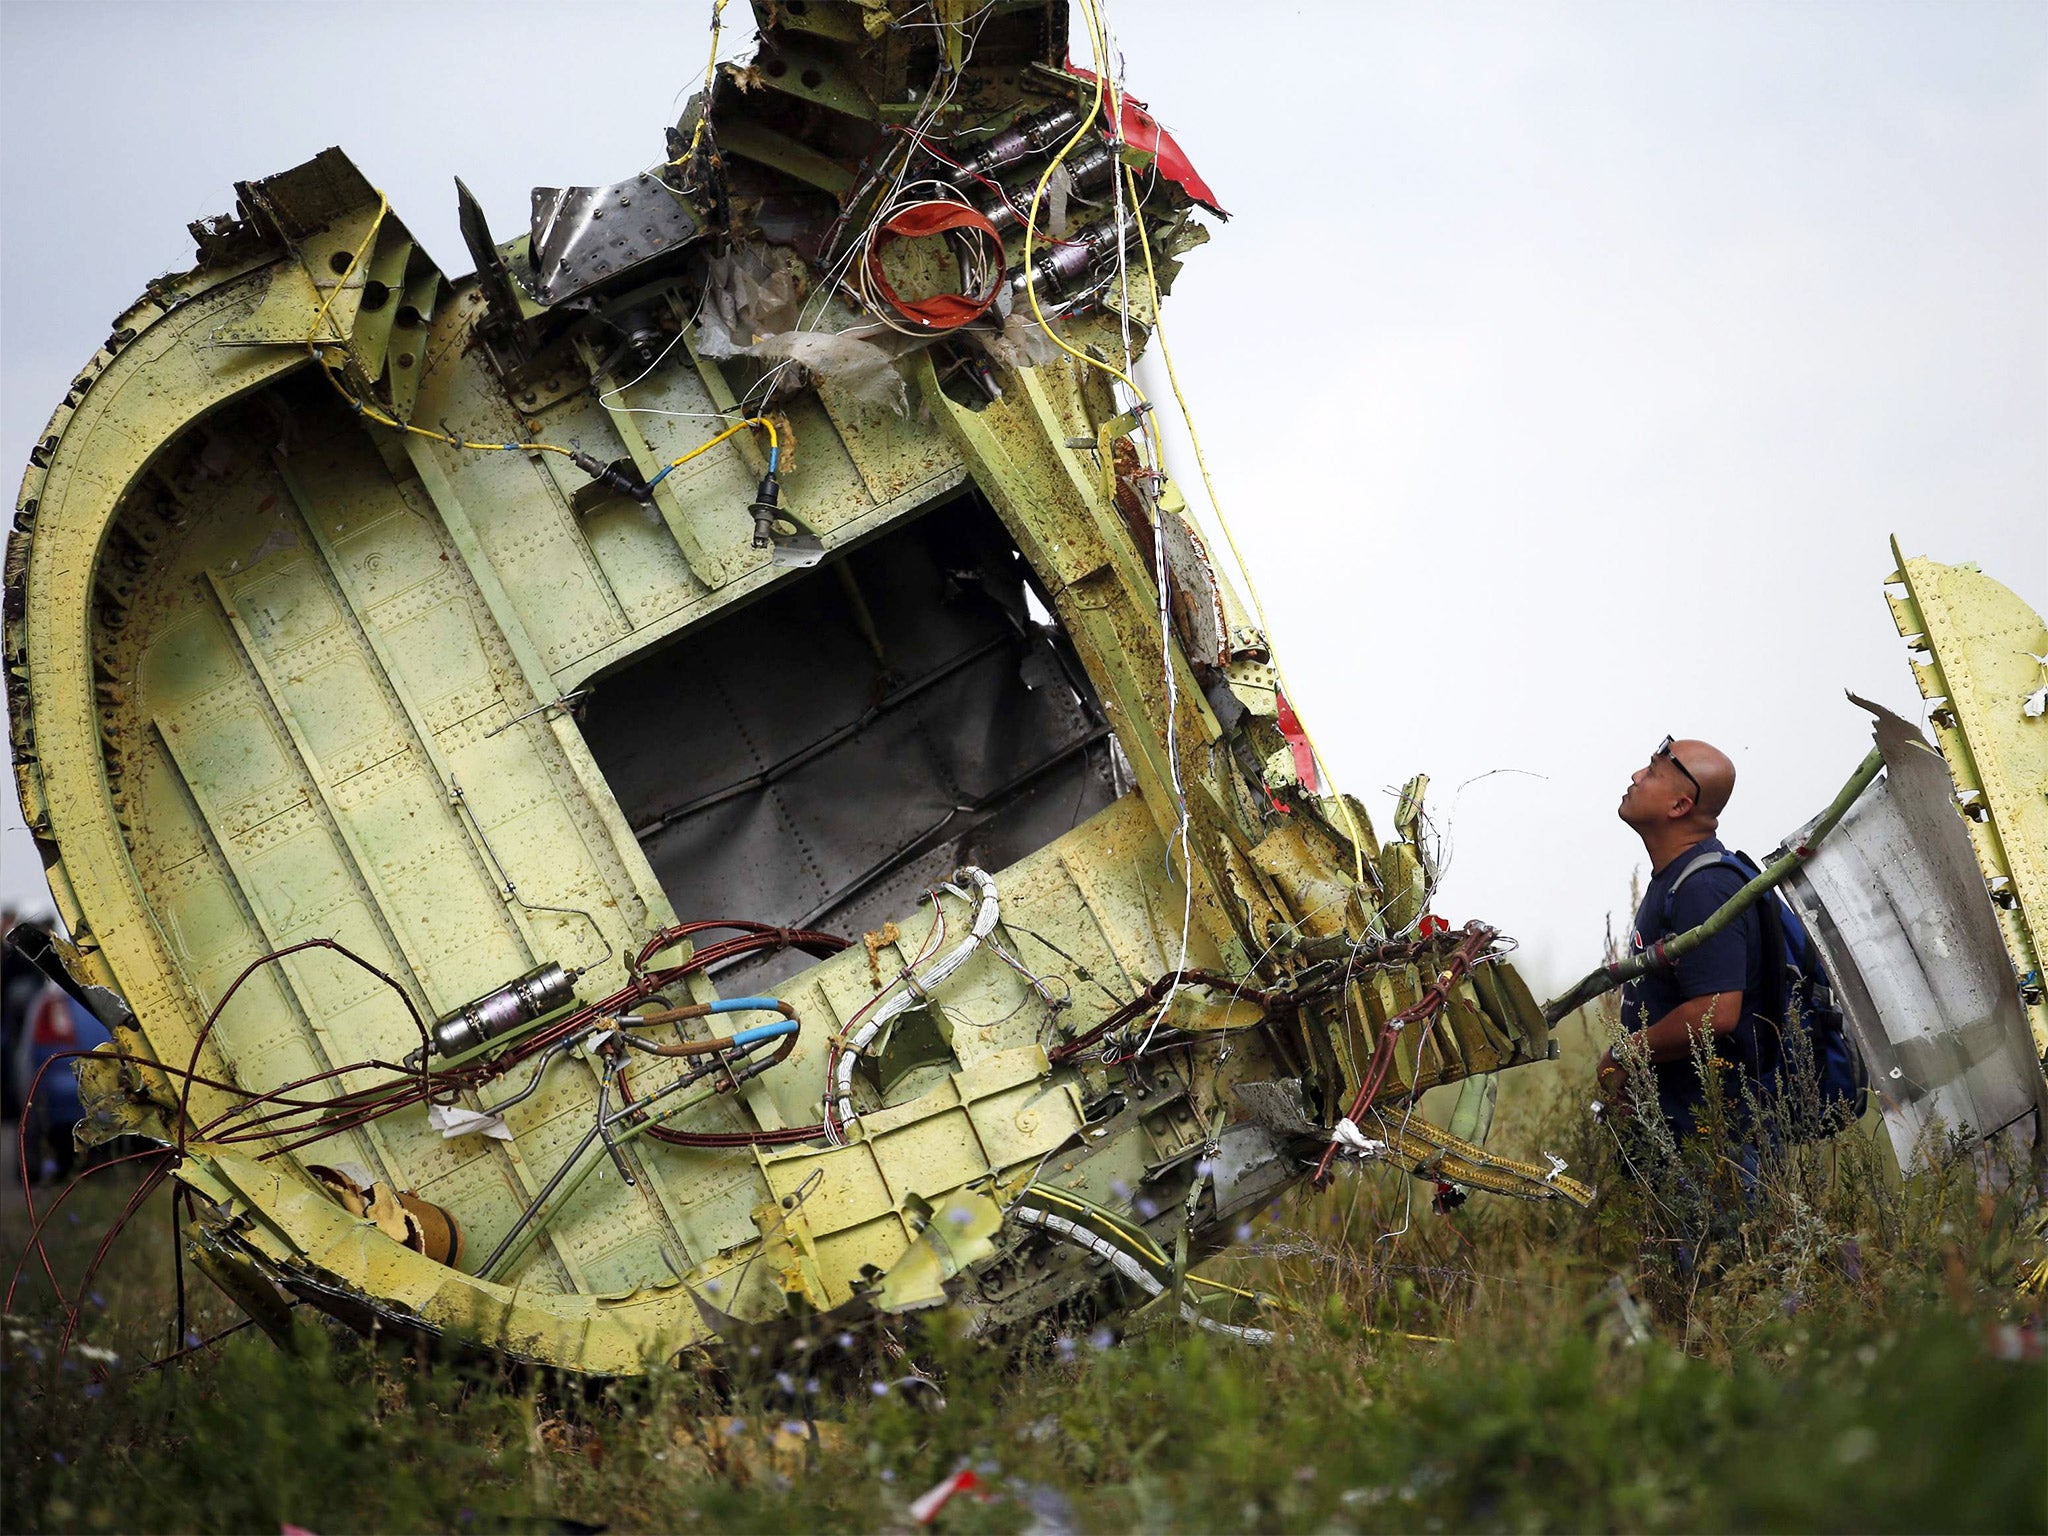 A Malaysian air crash investigator inspecting the crash site